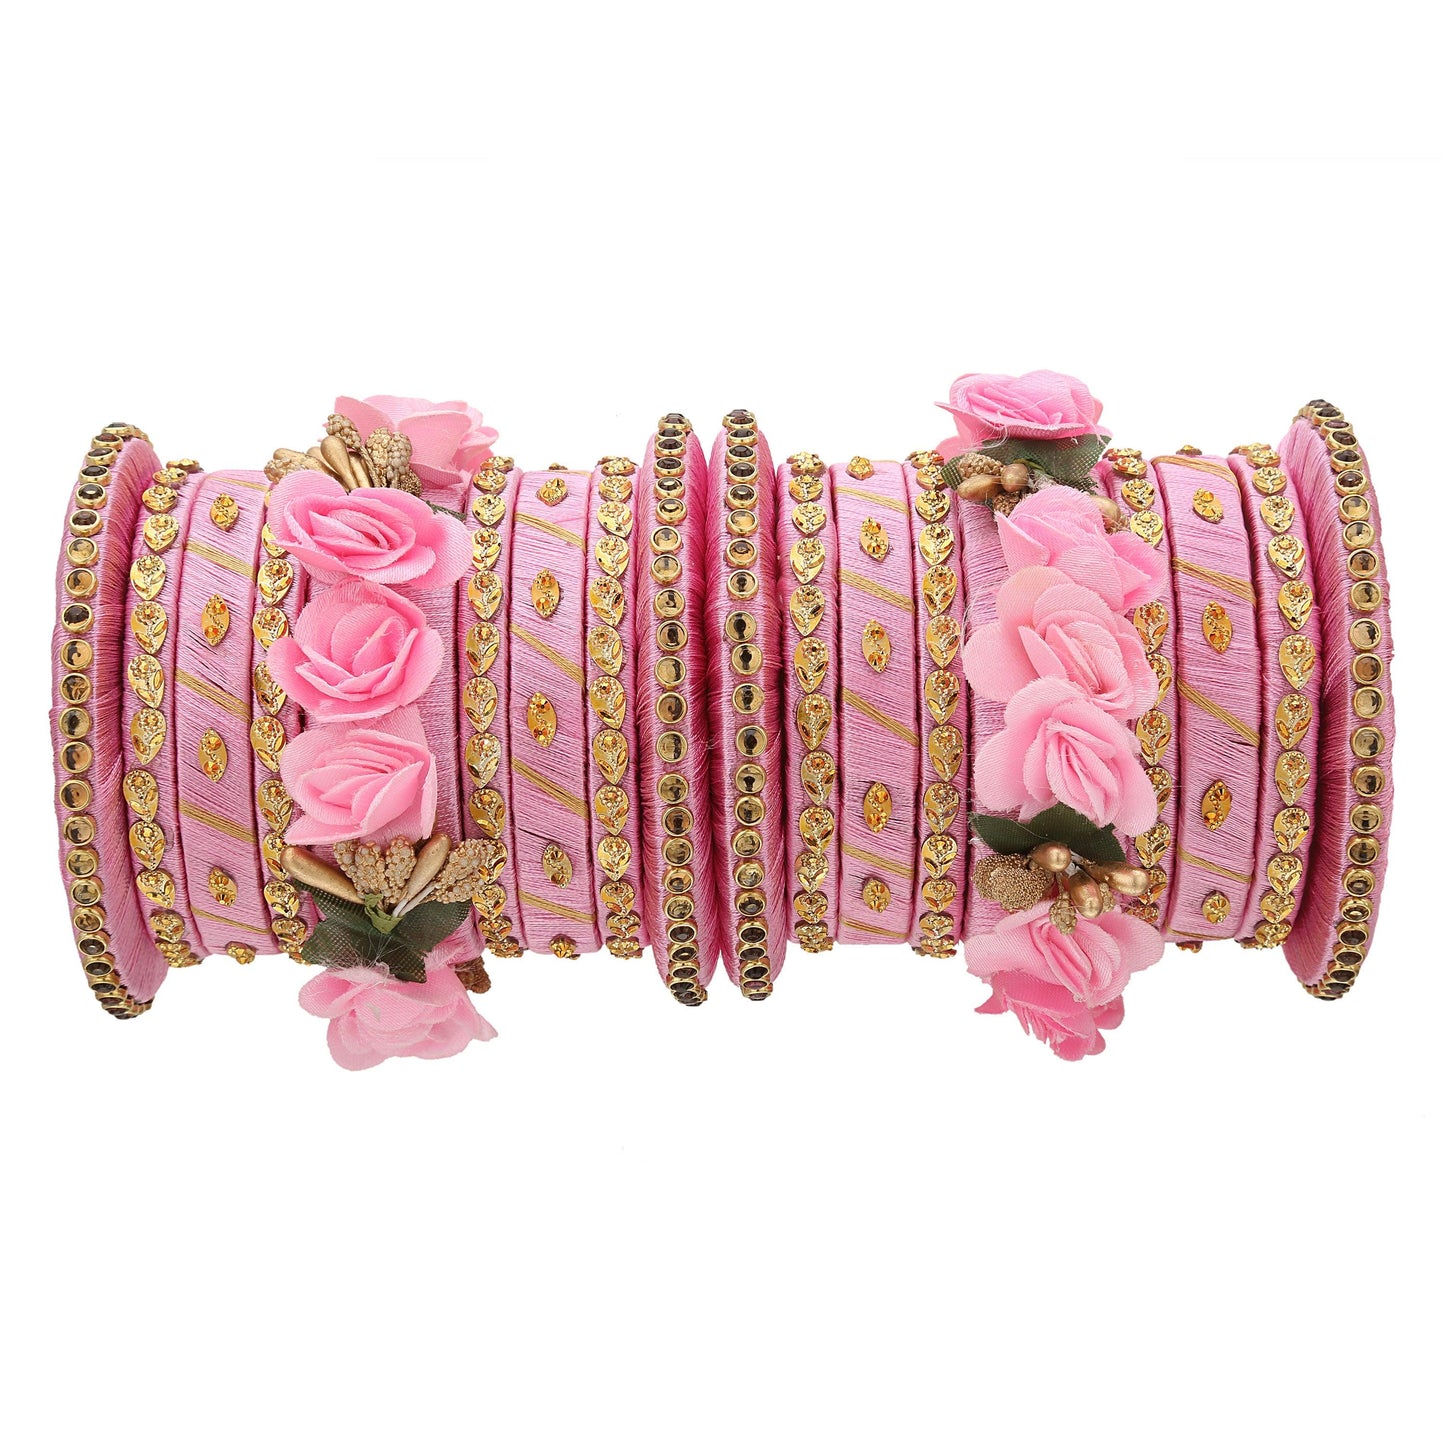 sukriti stylish handmade baby-pink flower designer silk thread plastic bridal chuda wedding bangles for women – set of 18